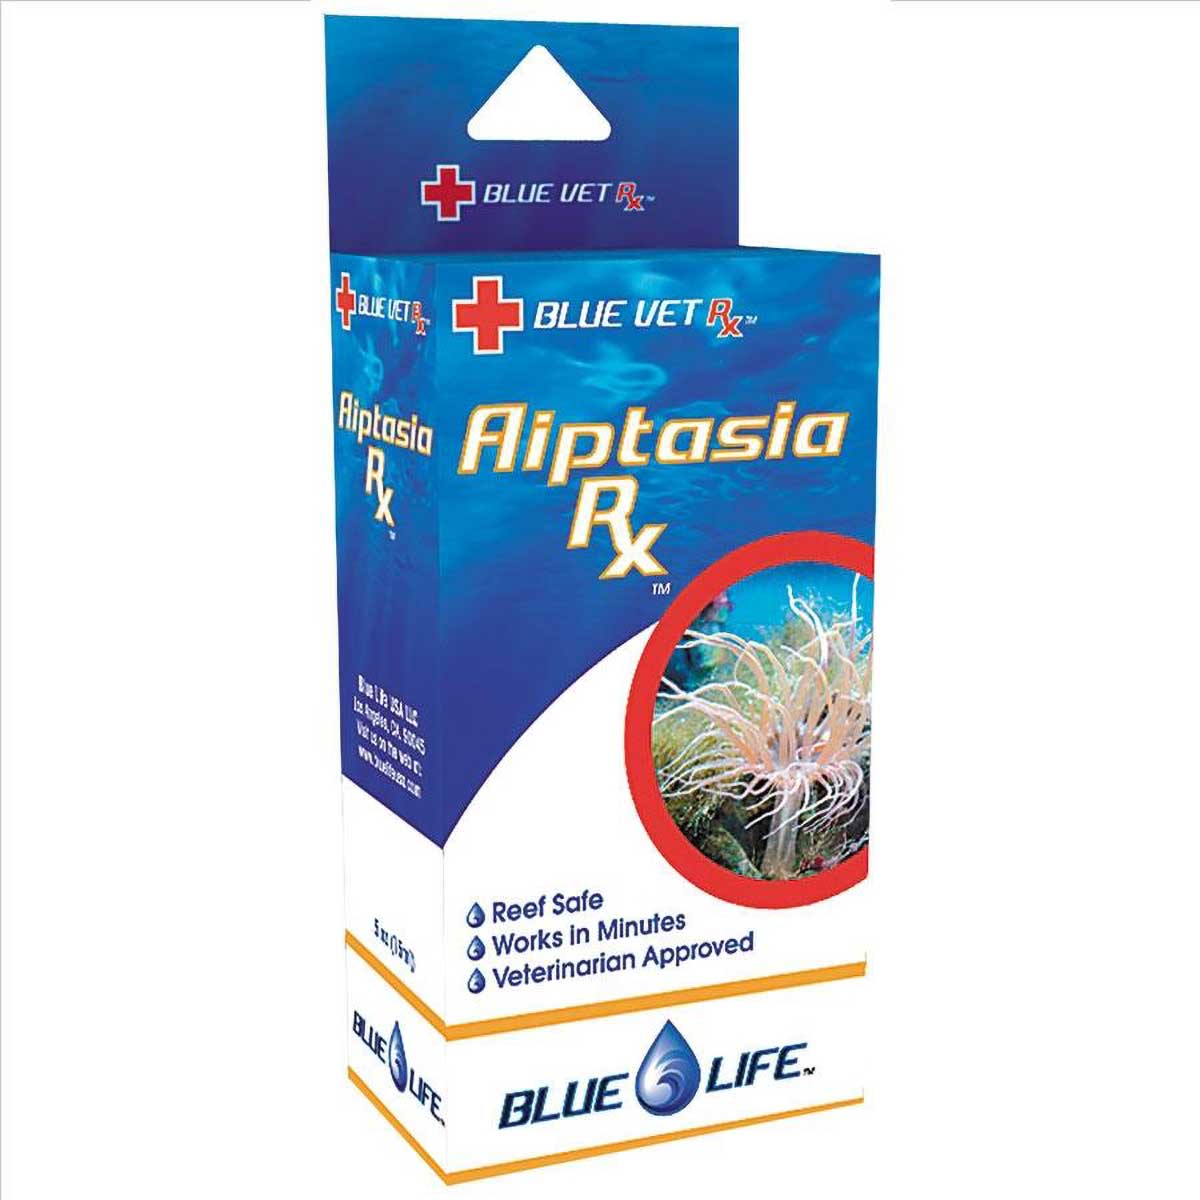 Blue Life Flatworm RX